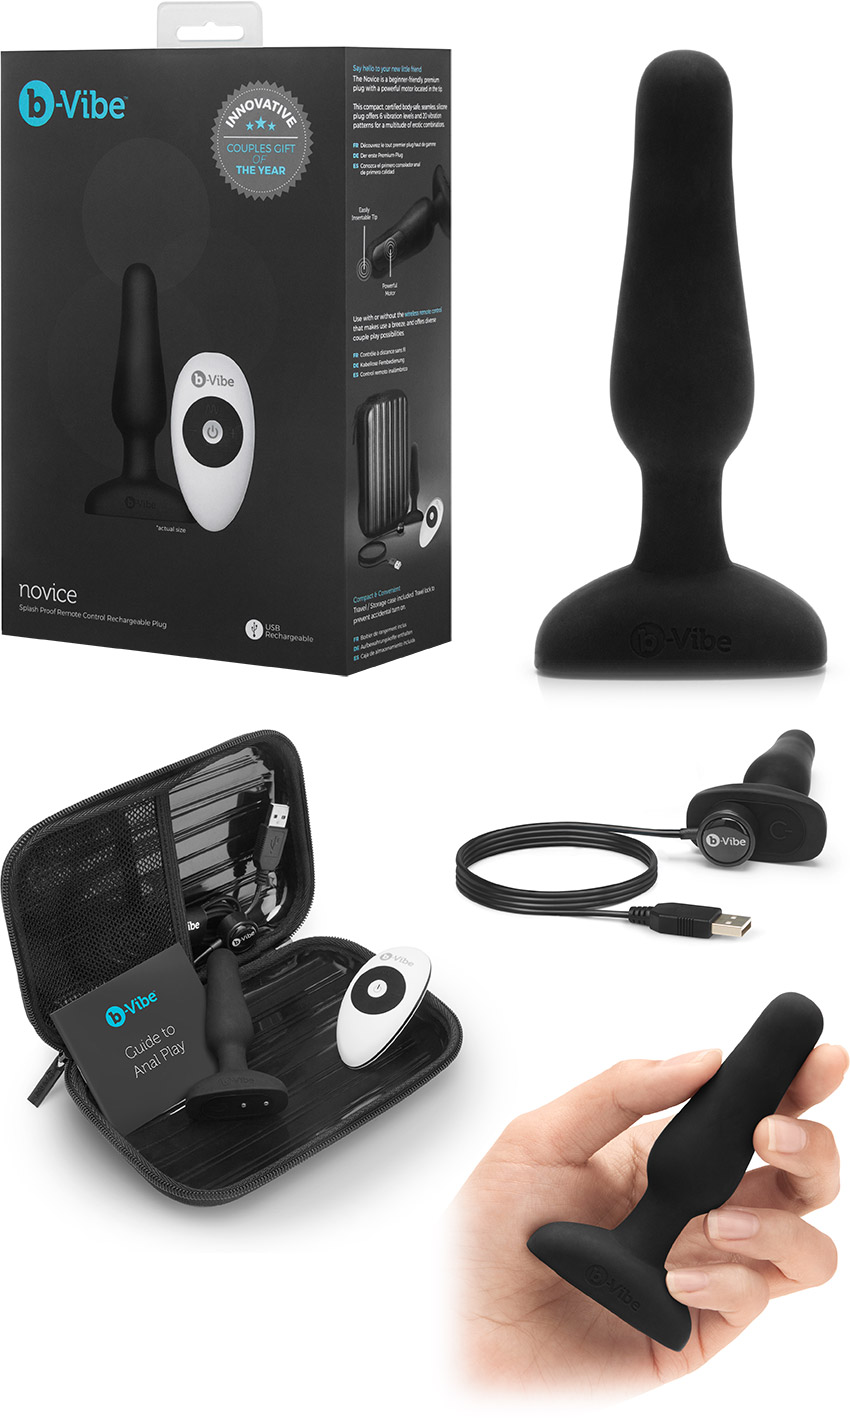 b-Vibe Novice remotely controlled vibrating butt plug - Black